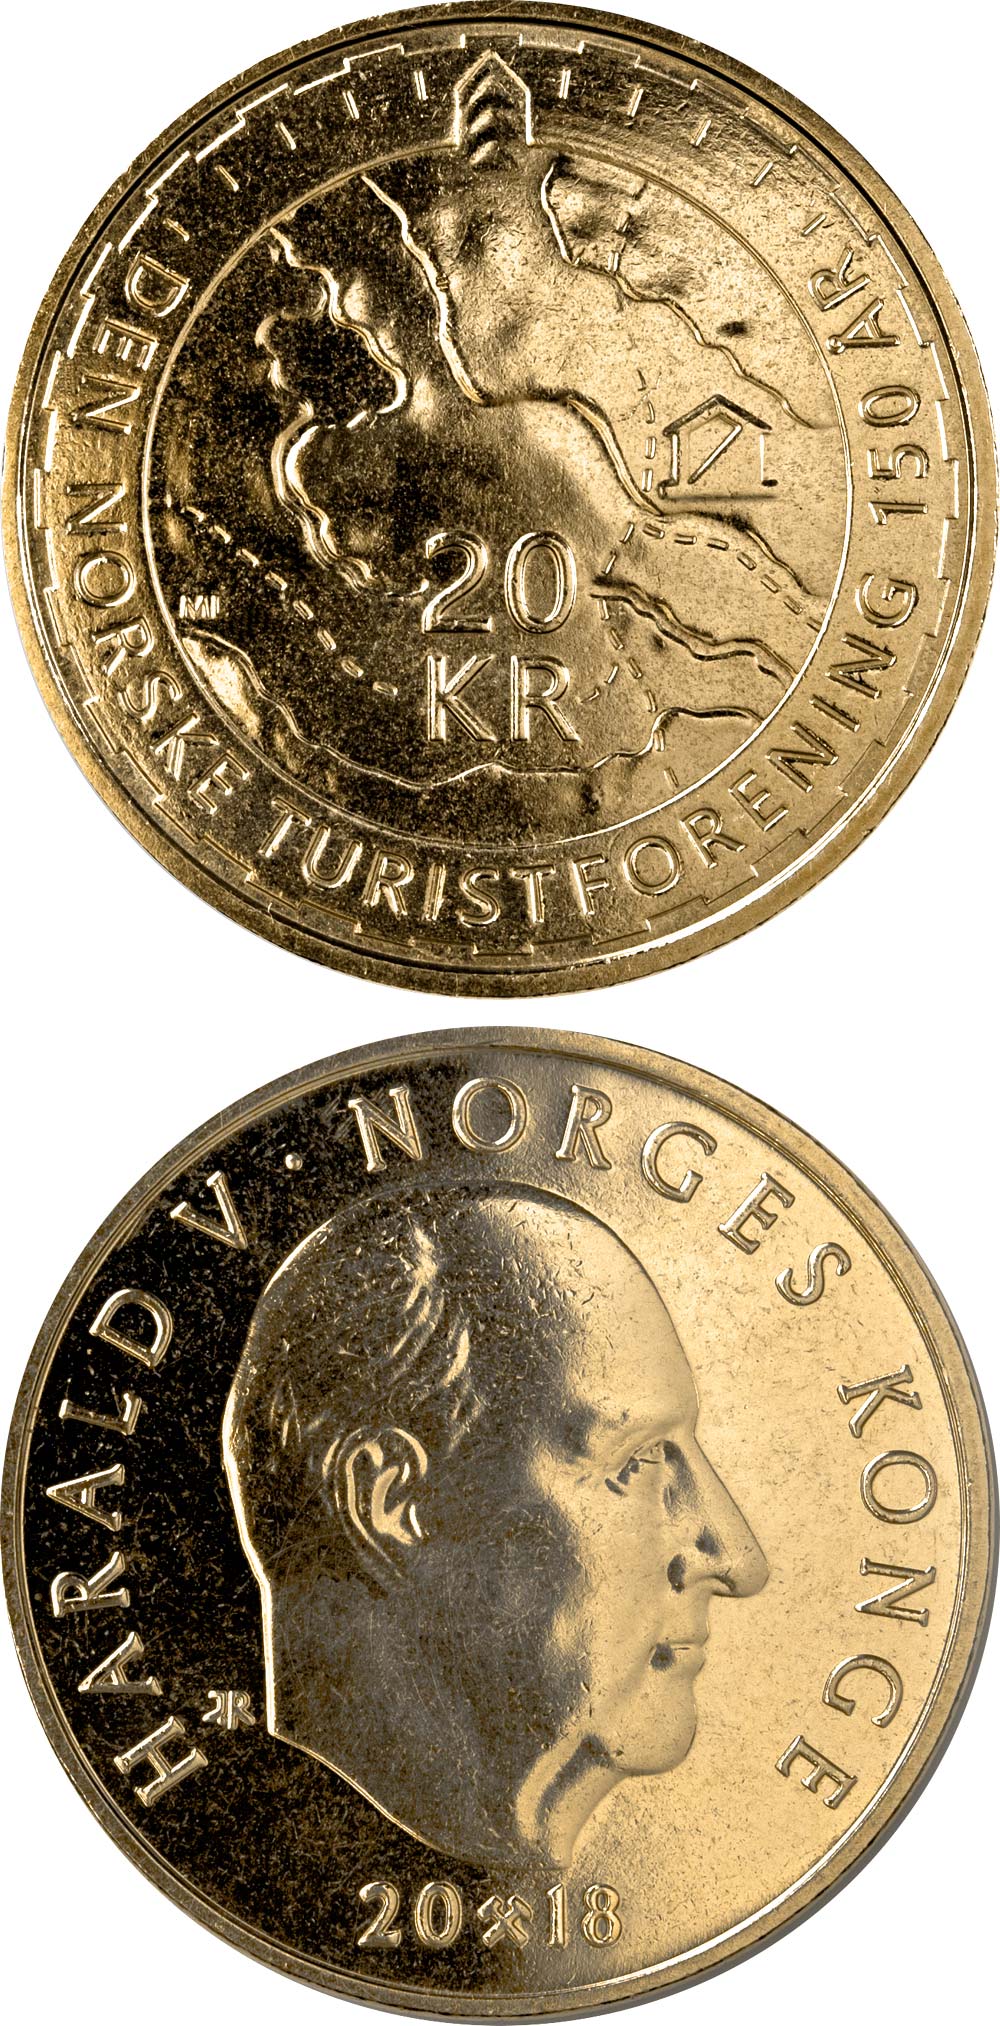 Norway 10 Kroner 2008 Wergeland commemorative coin Scandinavia UNC 